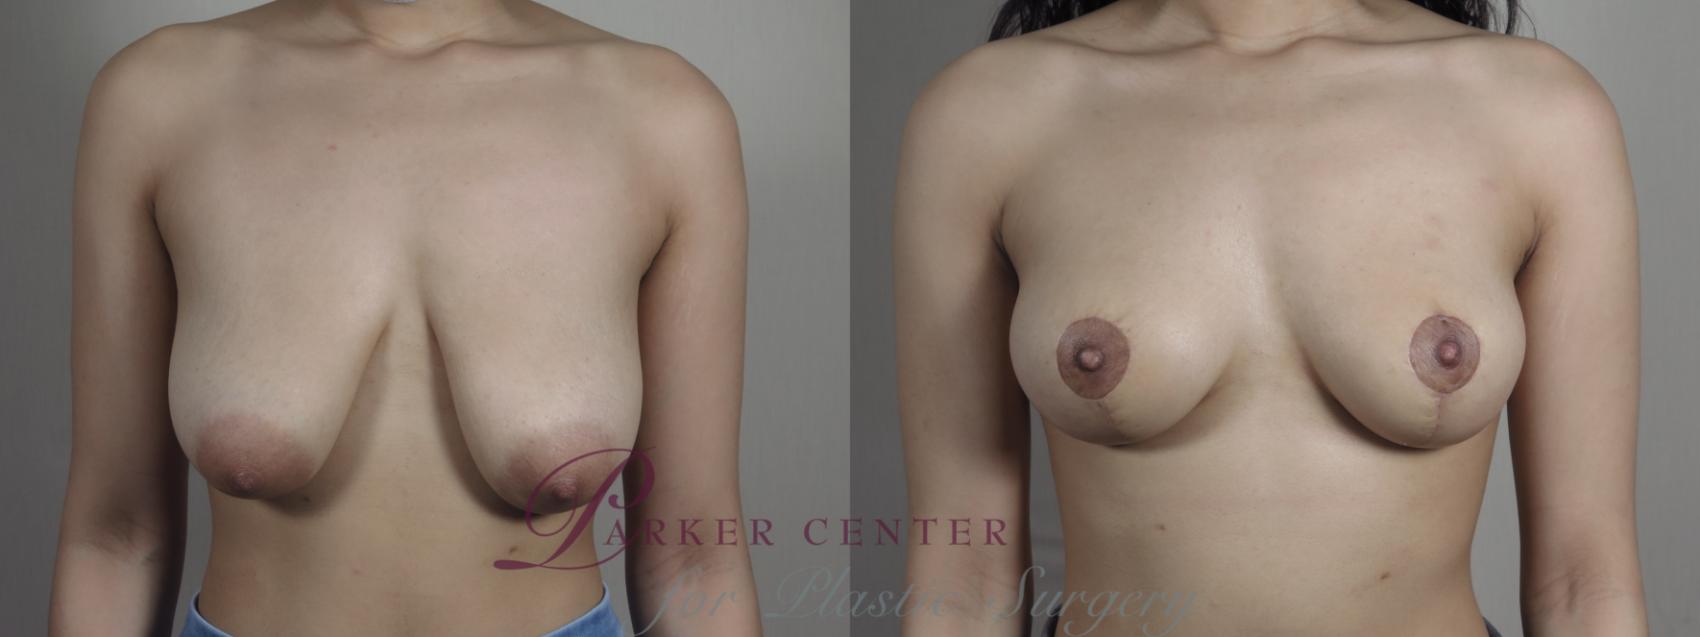 Breast Lift Case 1028 Before & After Front | Paramus, NJ | Parker Center for Plastic Surgery